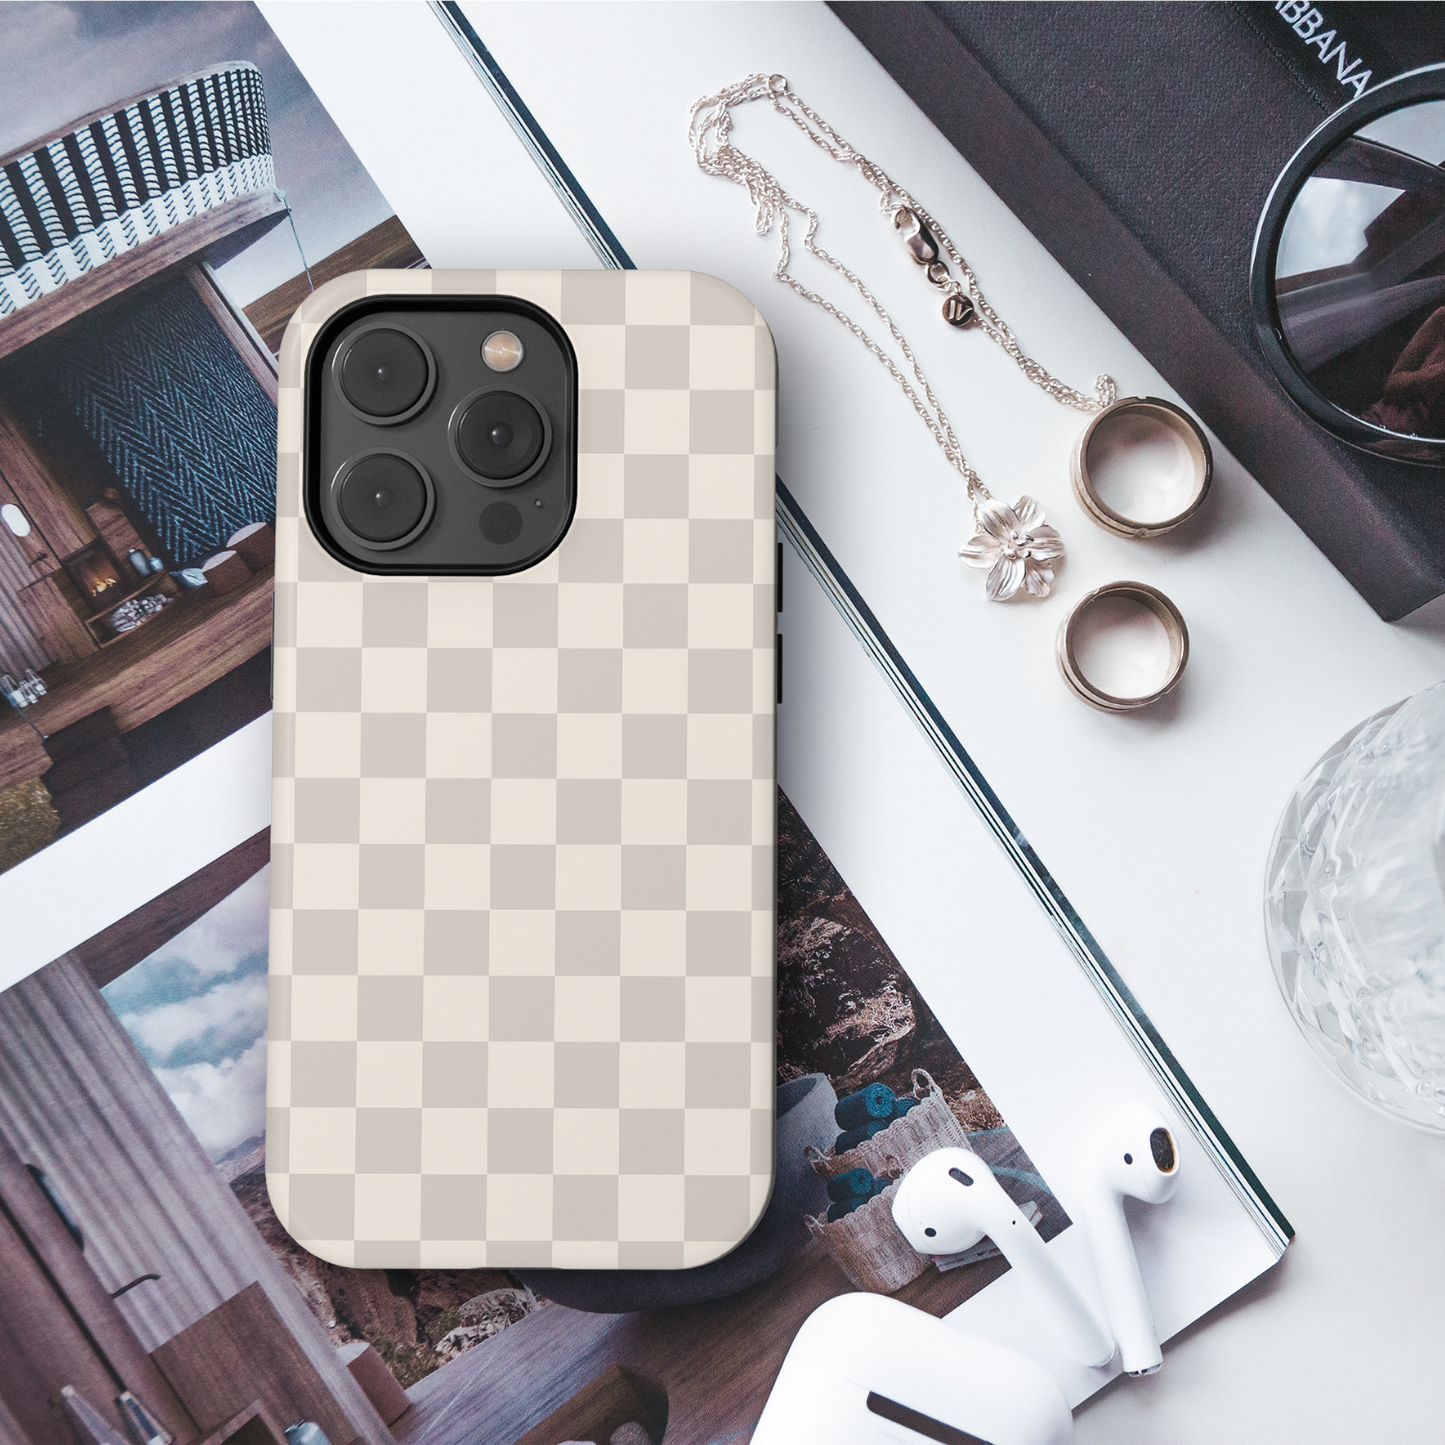 Vanilla Checkers II iPhone Case